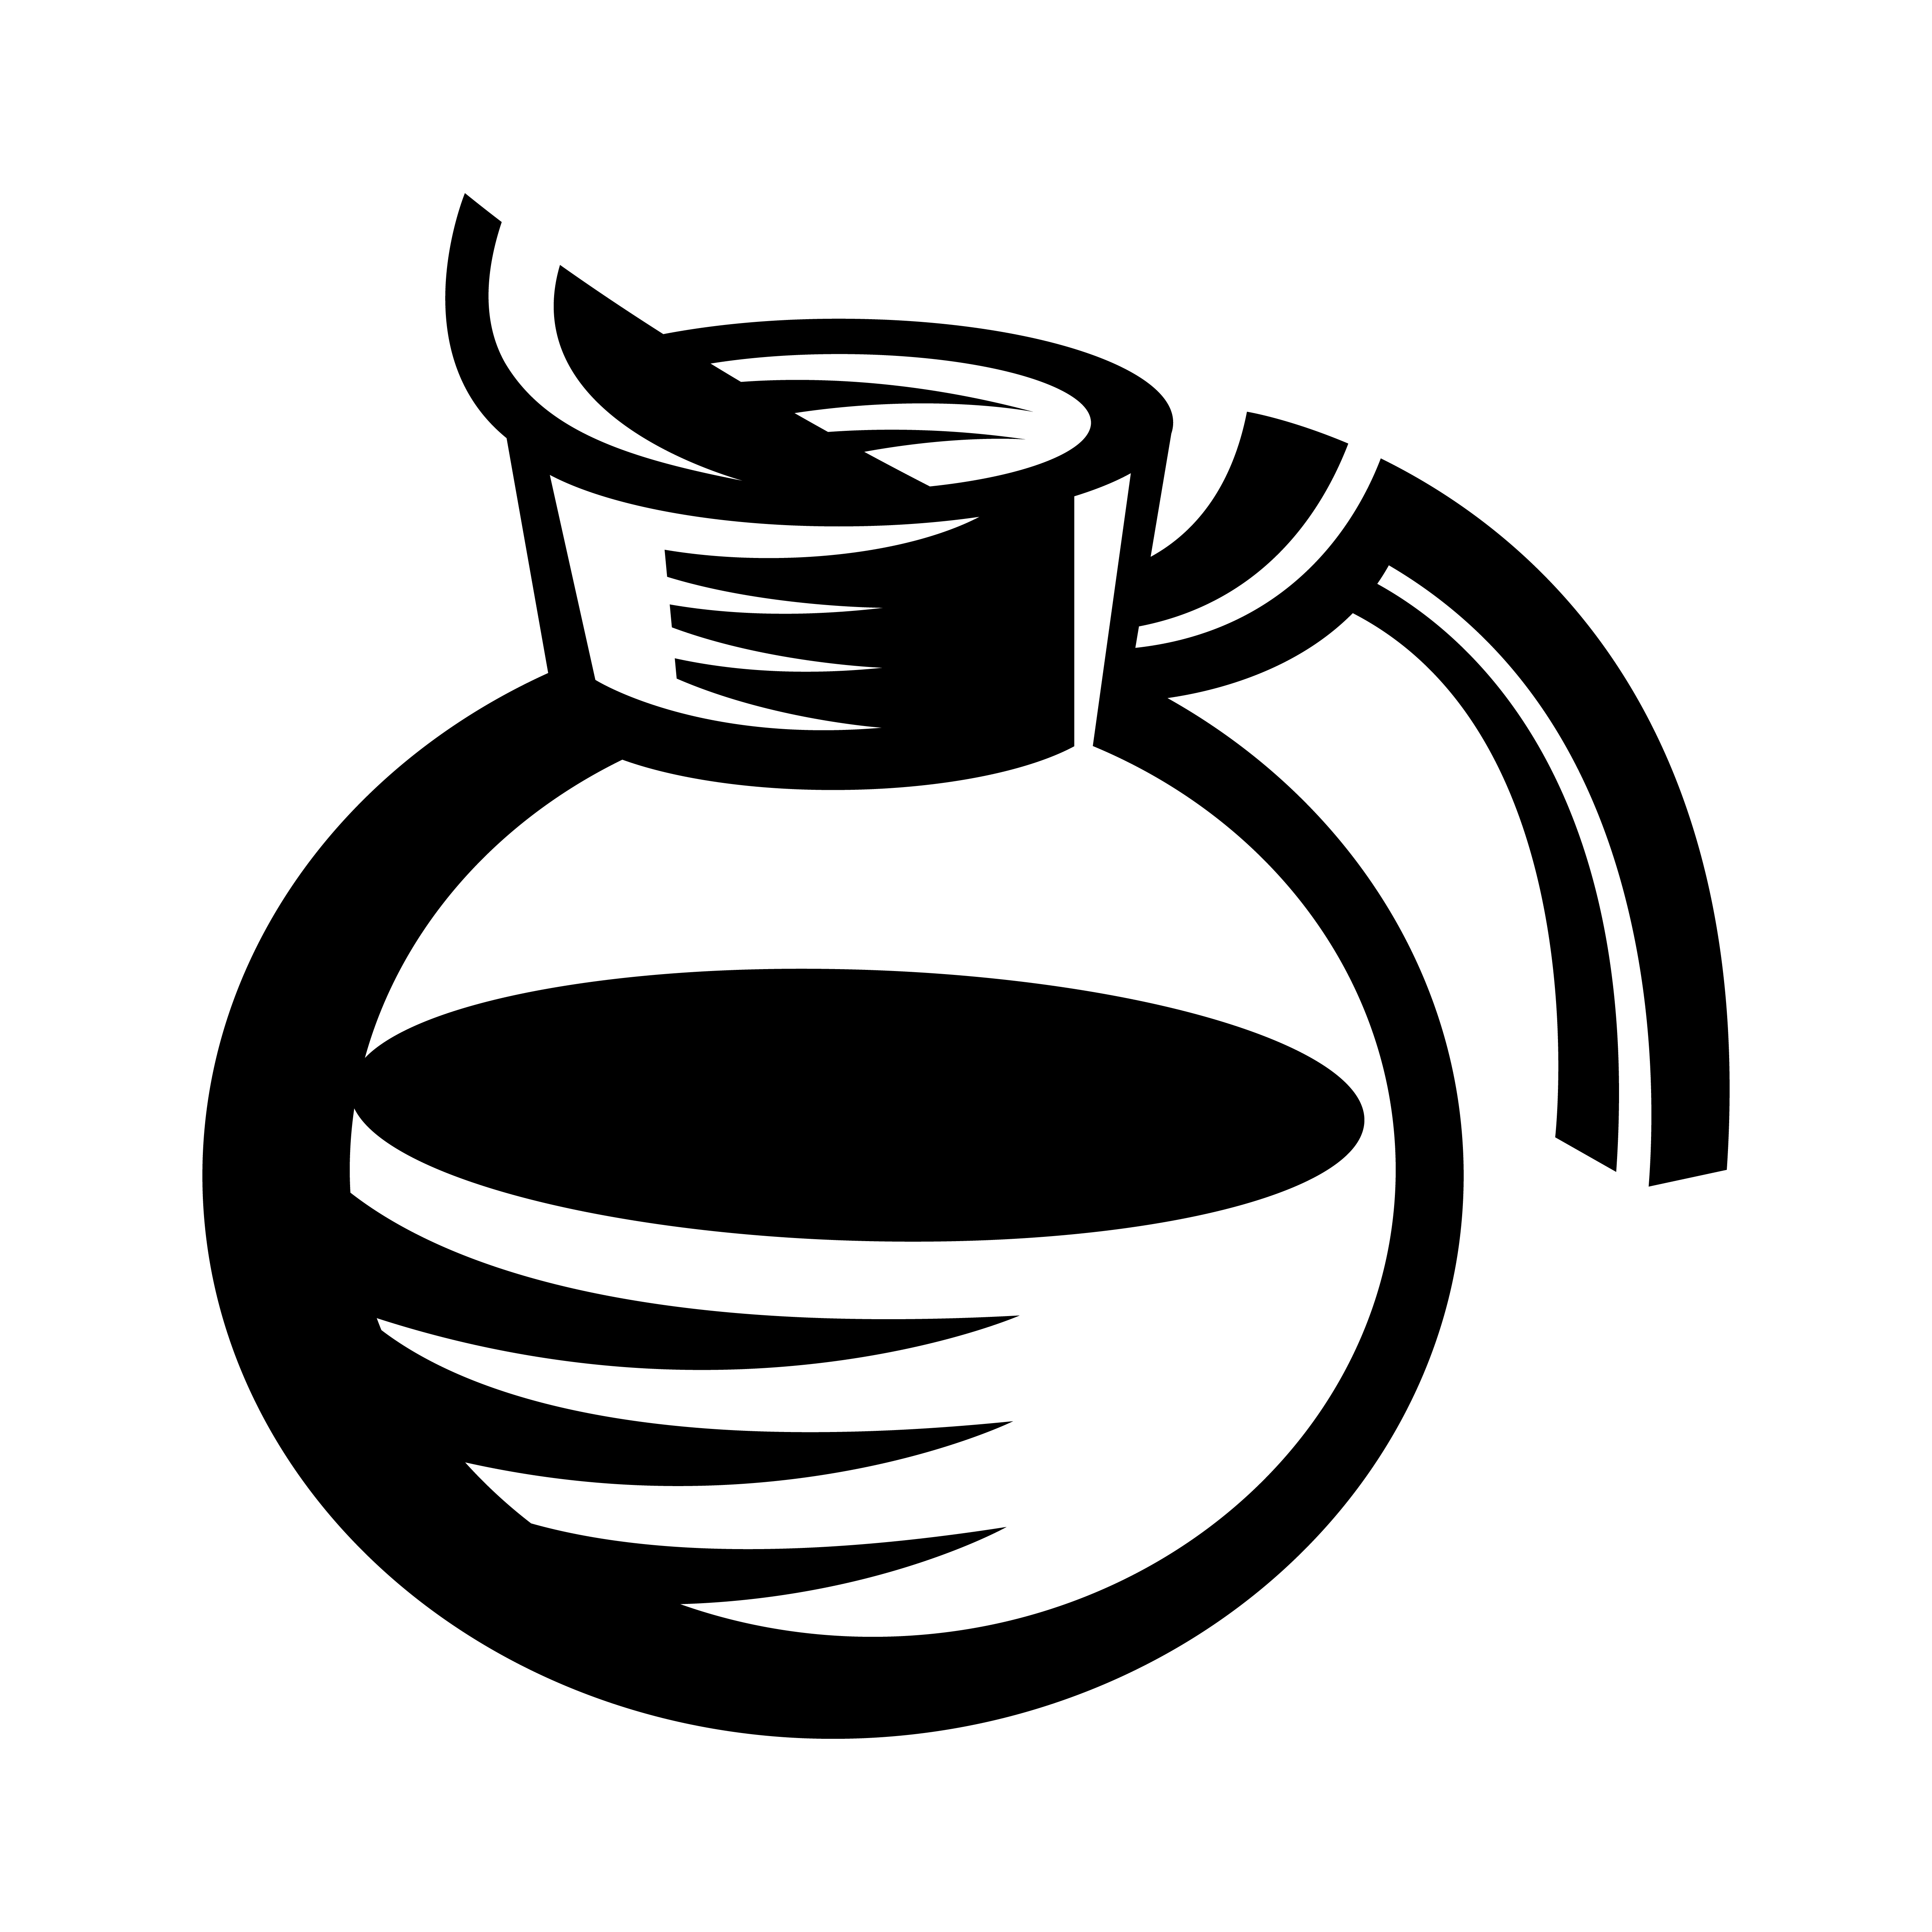 Download Coffee Pot Hot Drink Cartoon Illustration - Download Free Vectors, Clipart Graphics & Vector Art